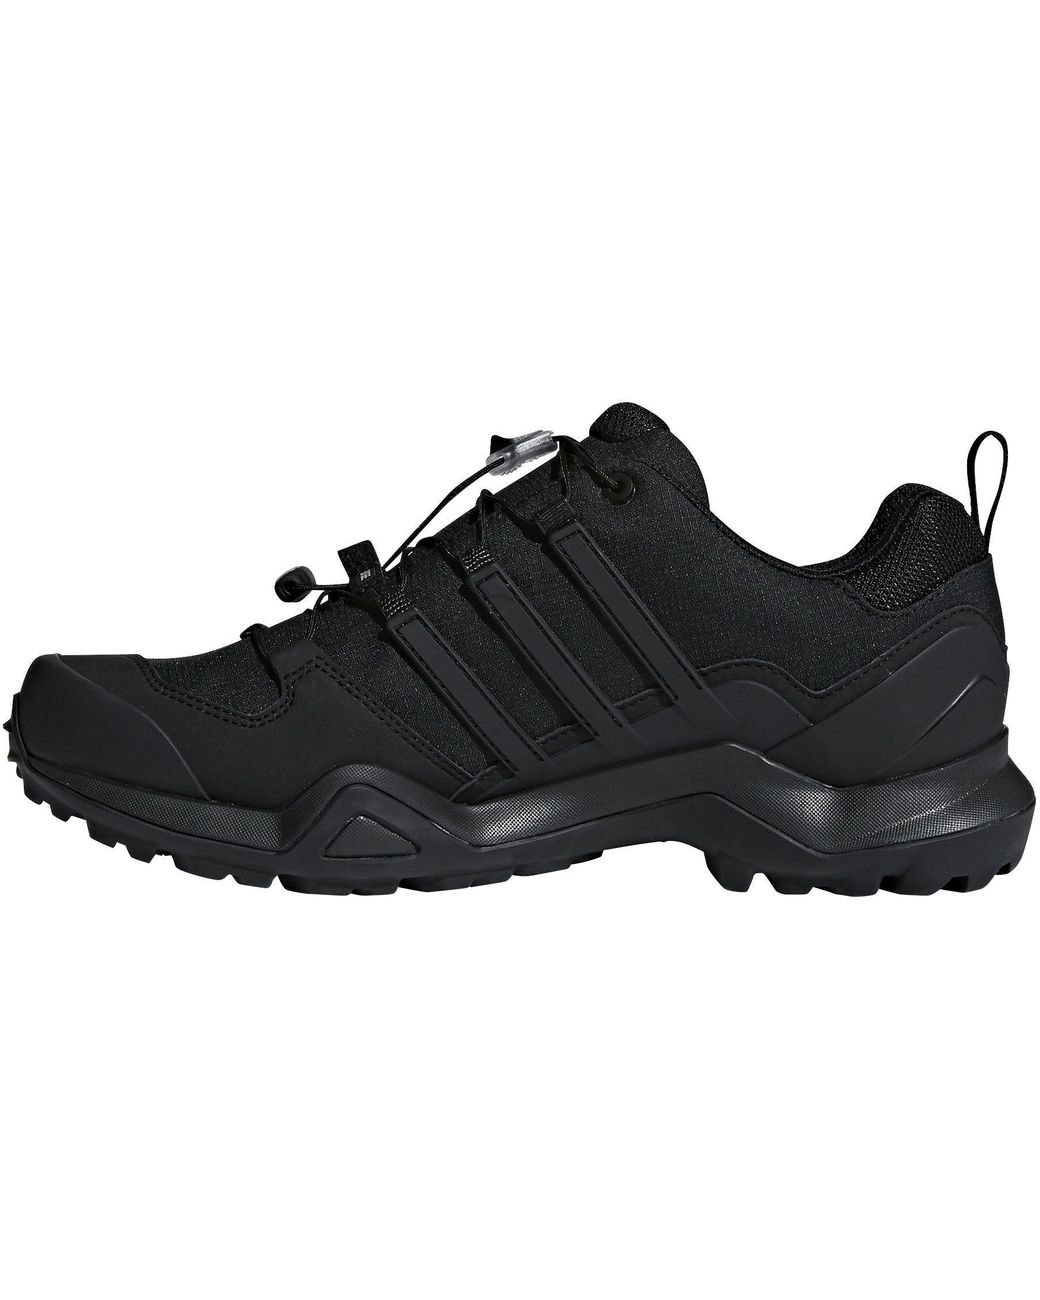 adidas Rubber Terrex Swift R2 Gore-tex Hiking Shoes in Black/Black/Black  (Black) - Save 8% | Lyst